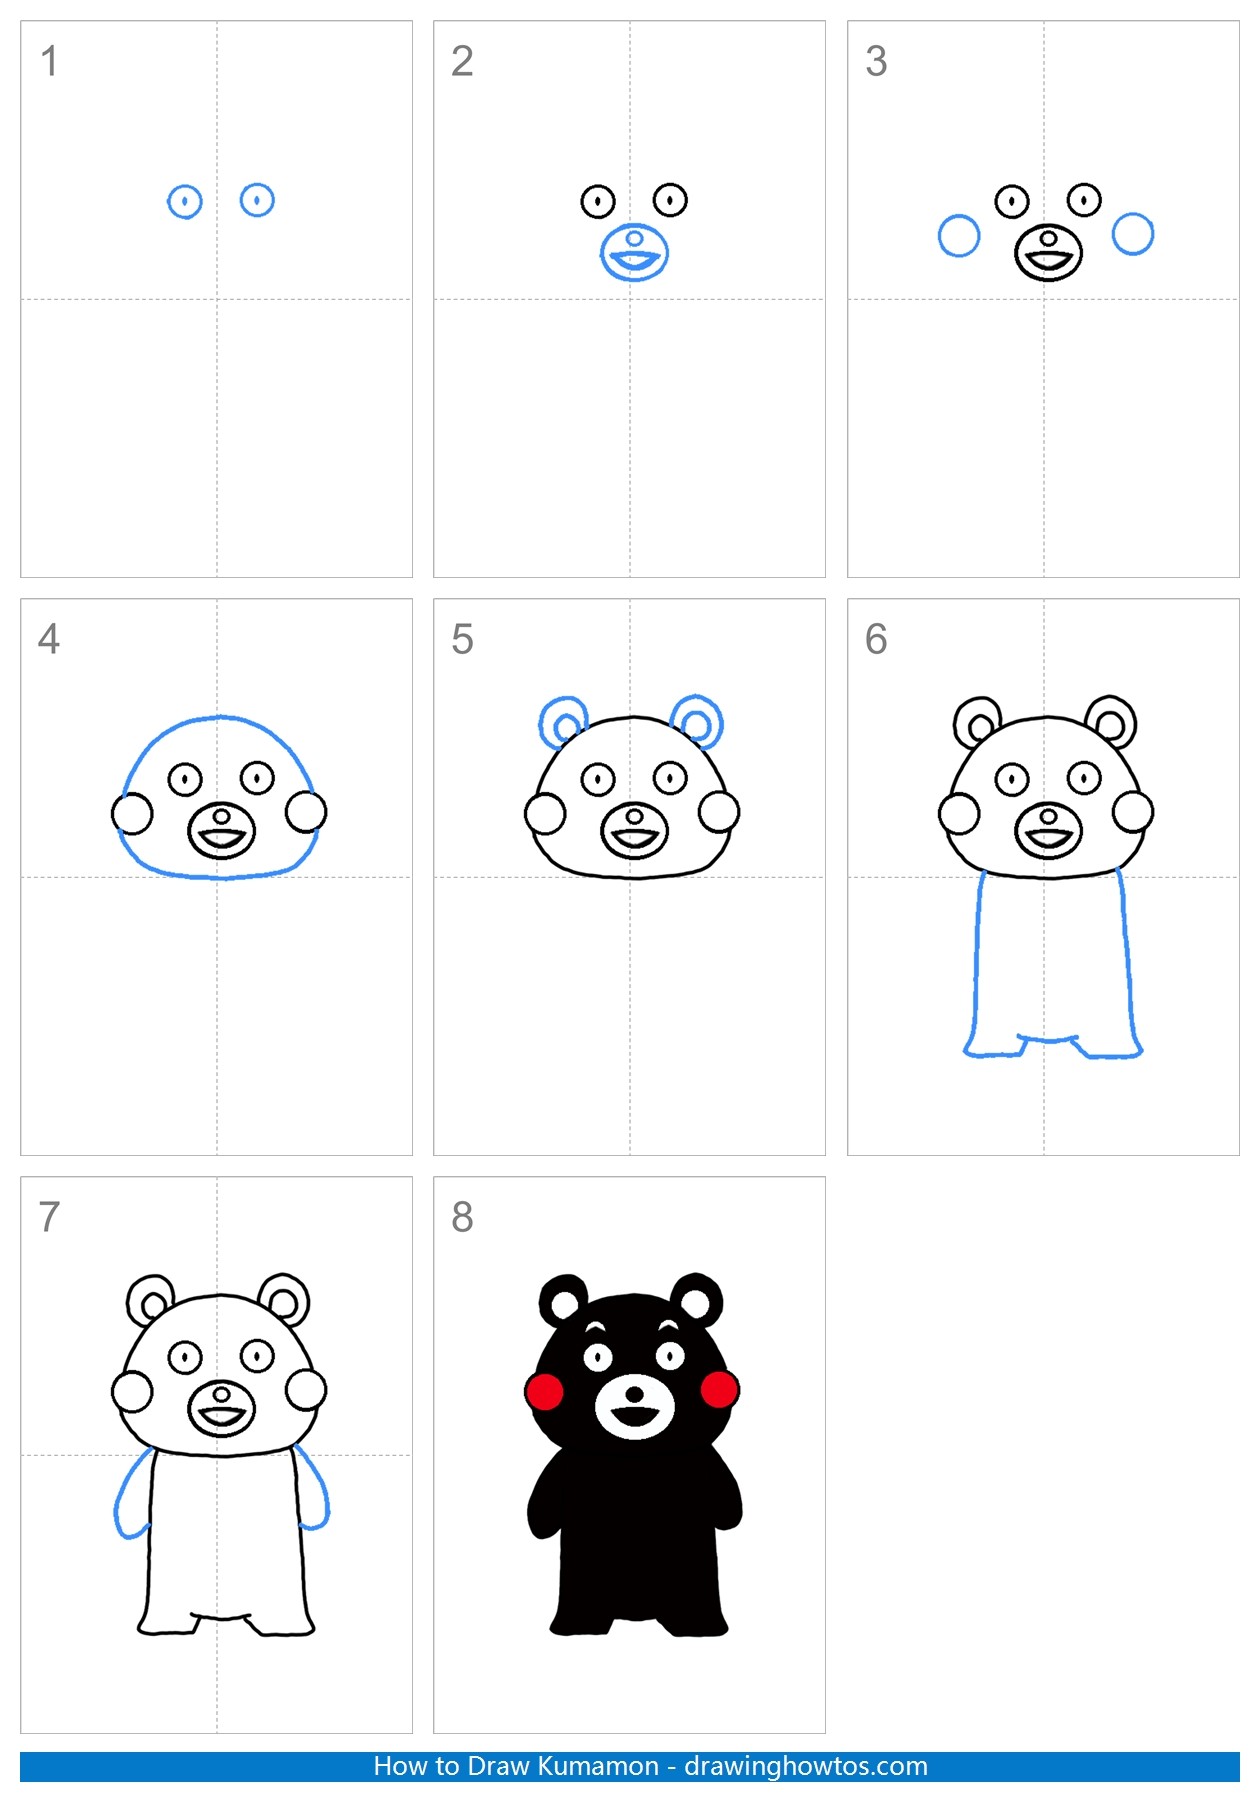 How to Draw Kumamon Step by Step